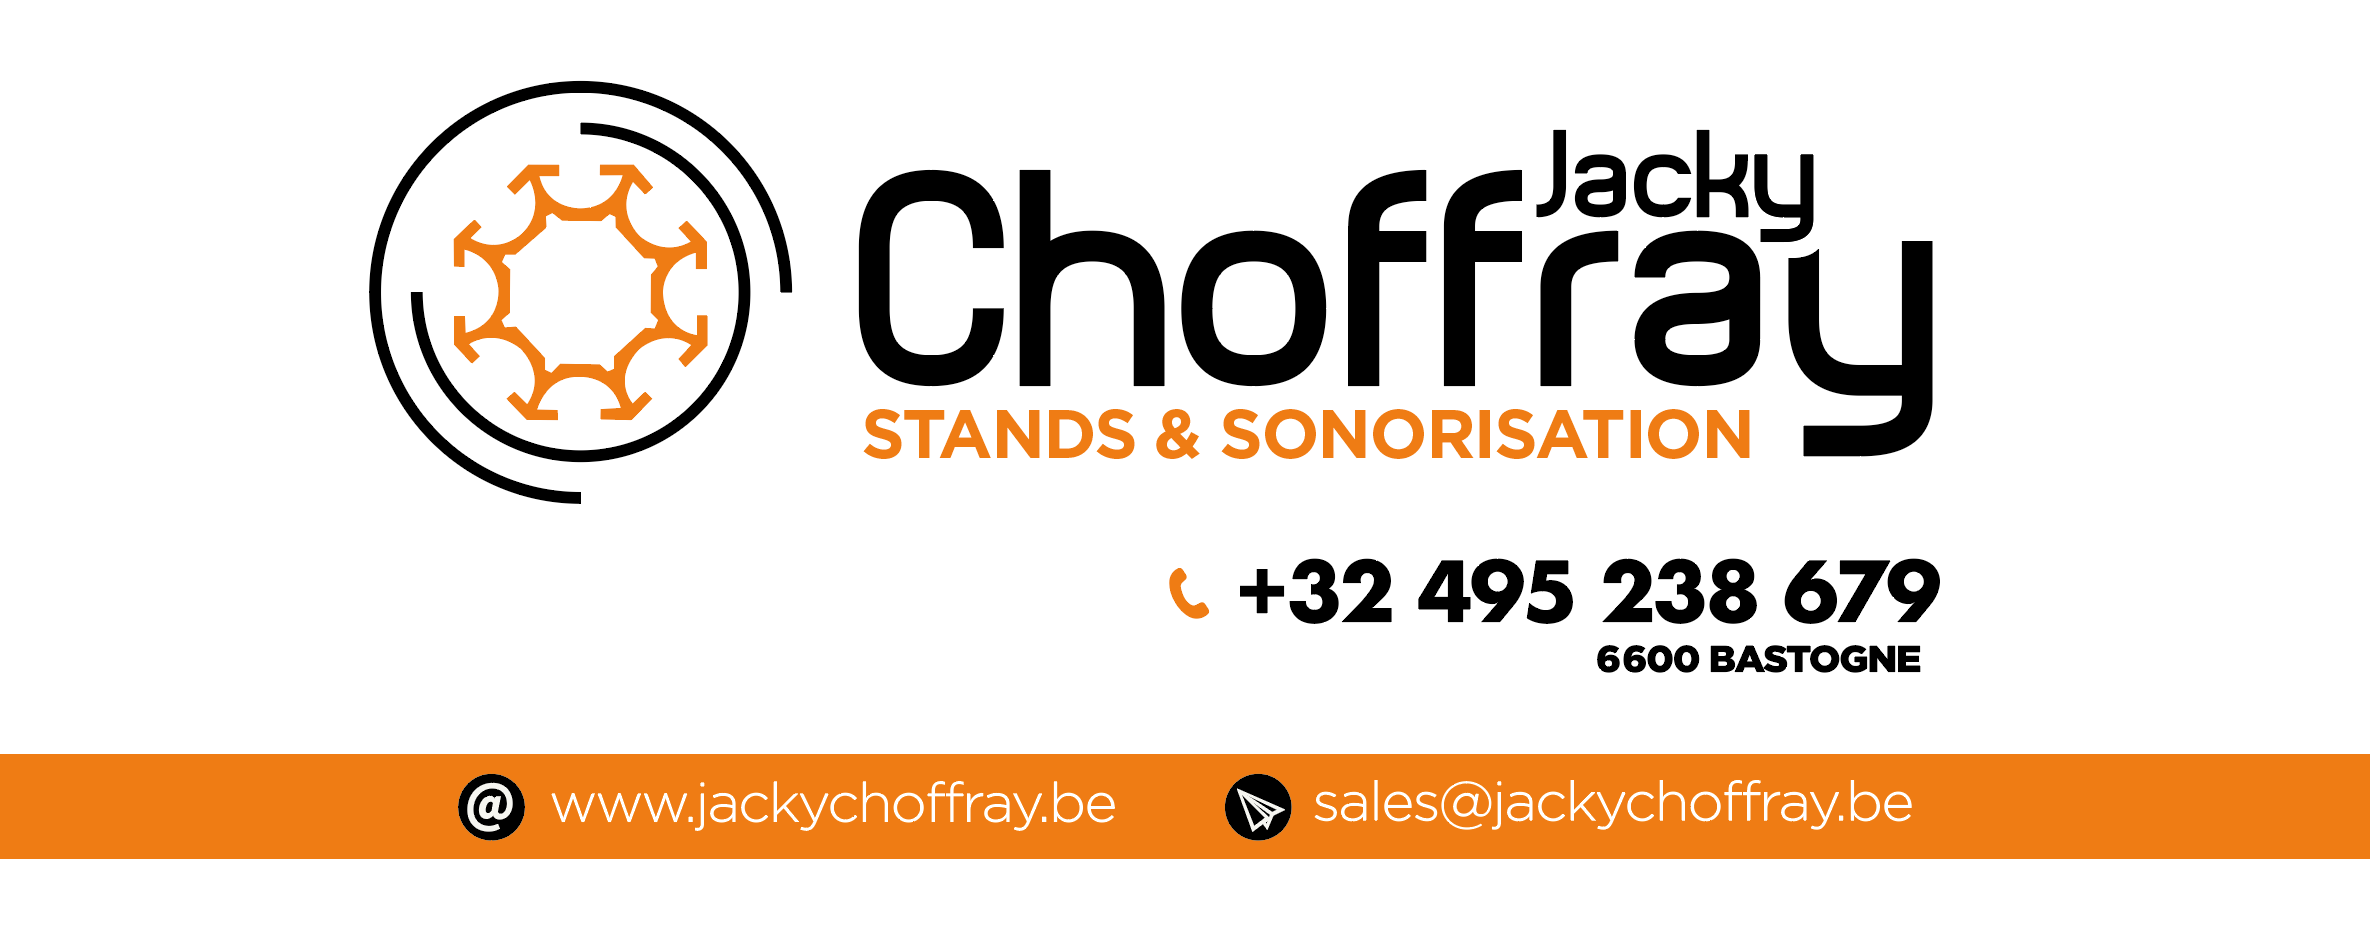 Stands & sonorisation Jacky Choffray